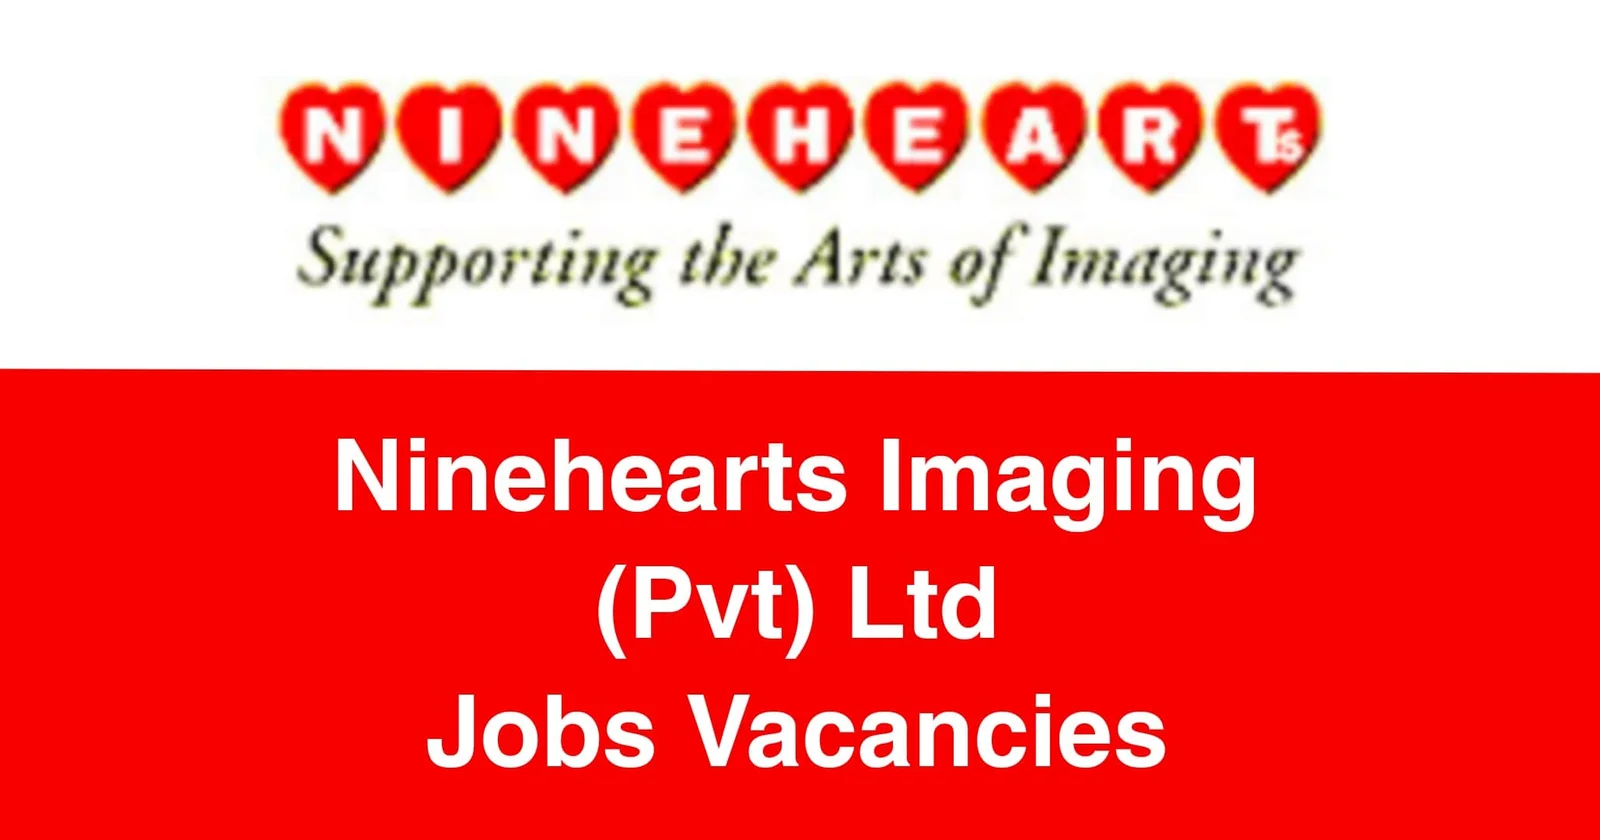 Ninehearts Imaging (Pvt) Ltd Jobs Vacancies